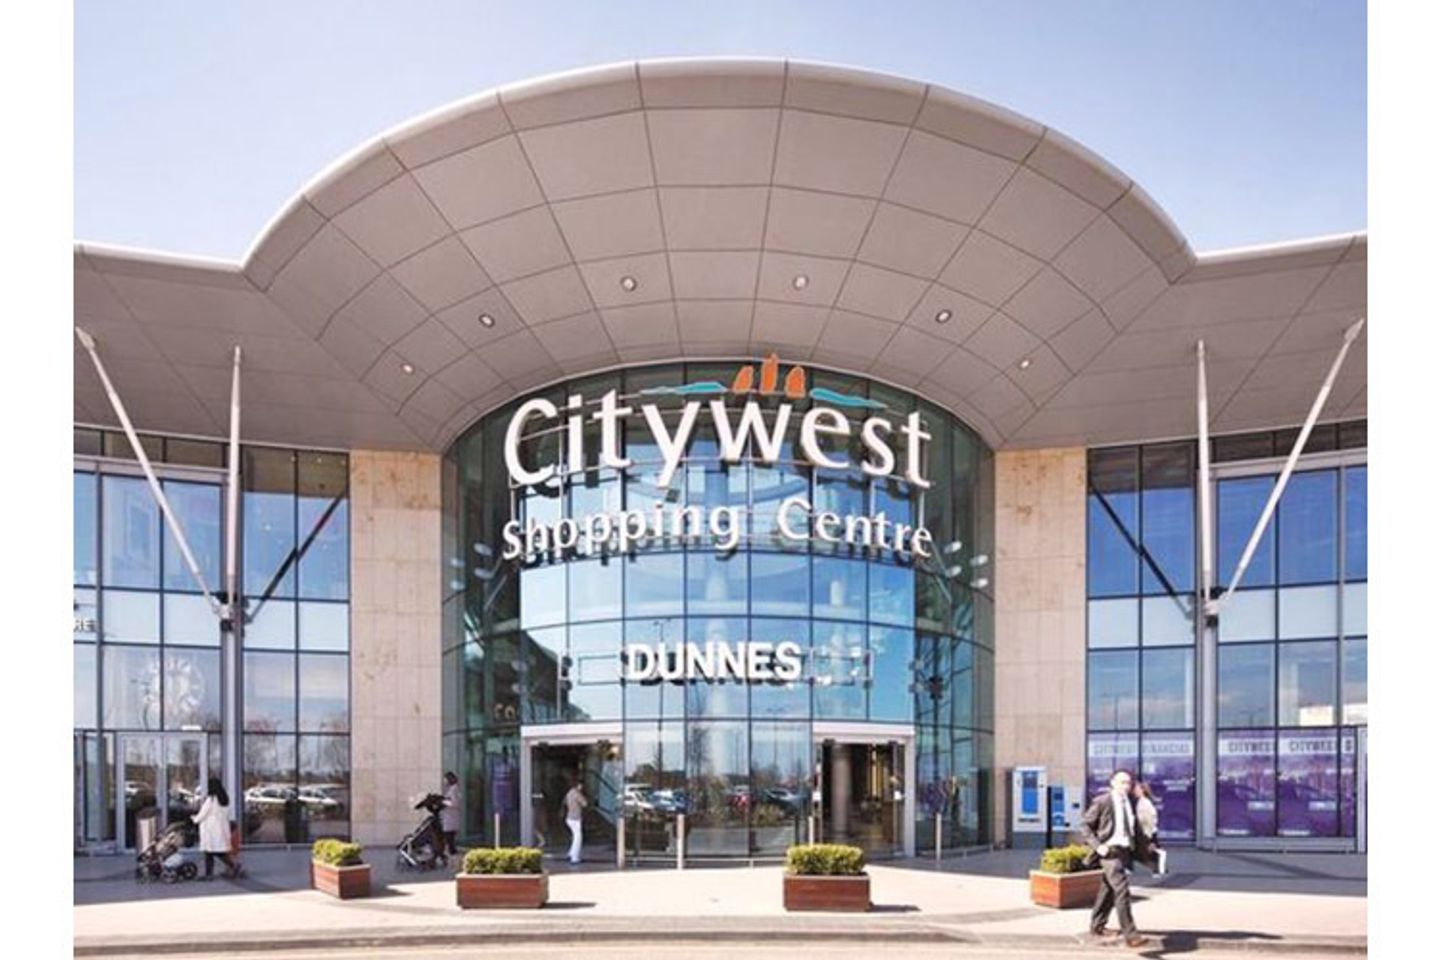 Citywest Shopping Centre, Citywest, Co. Dublin